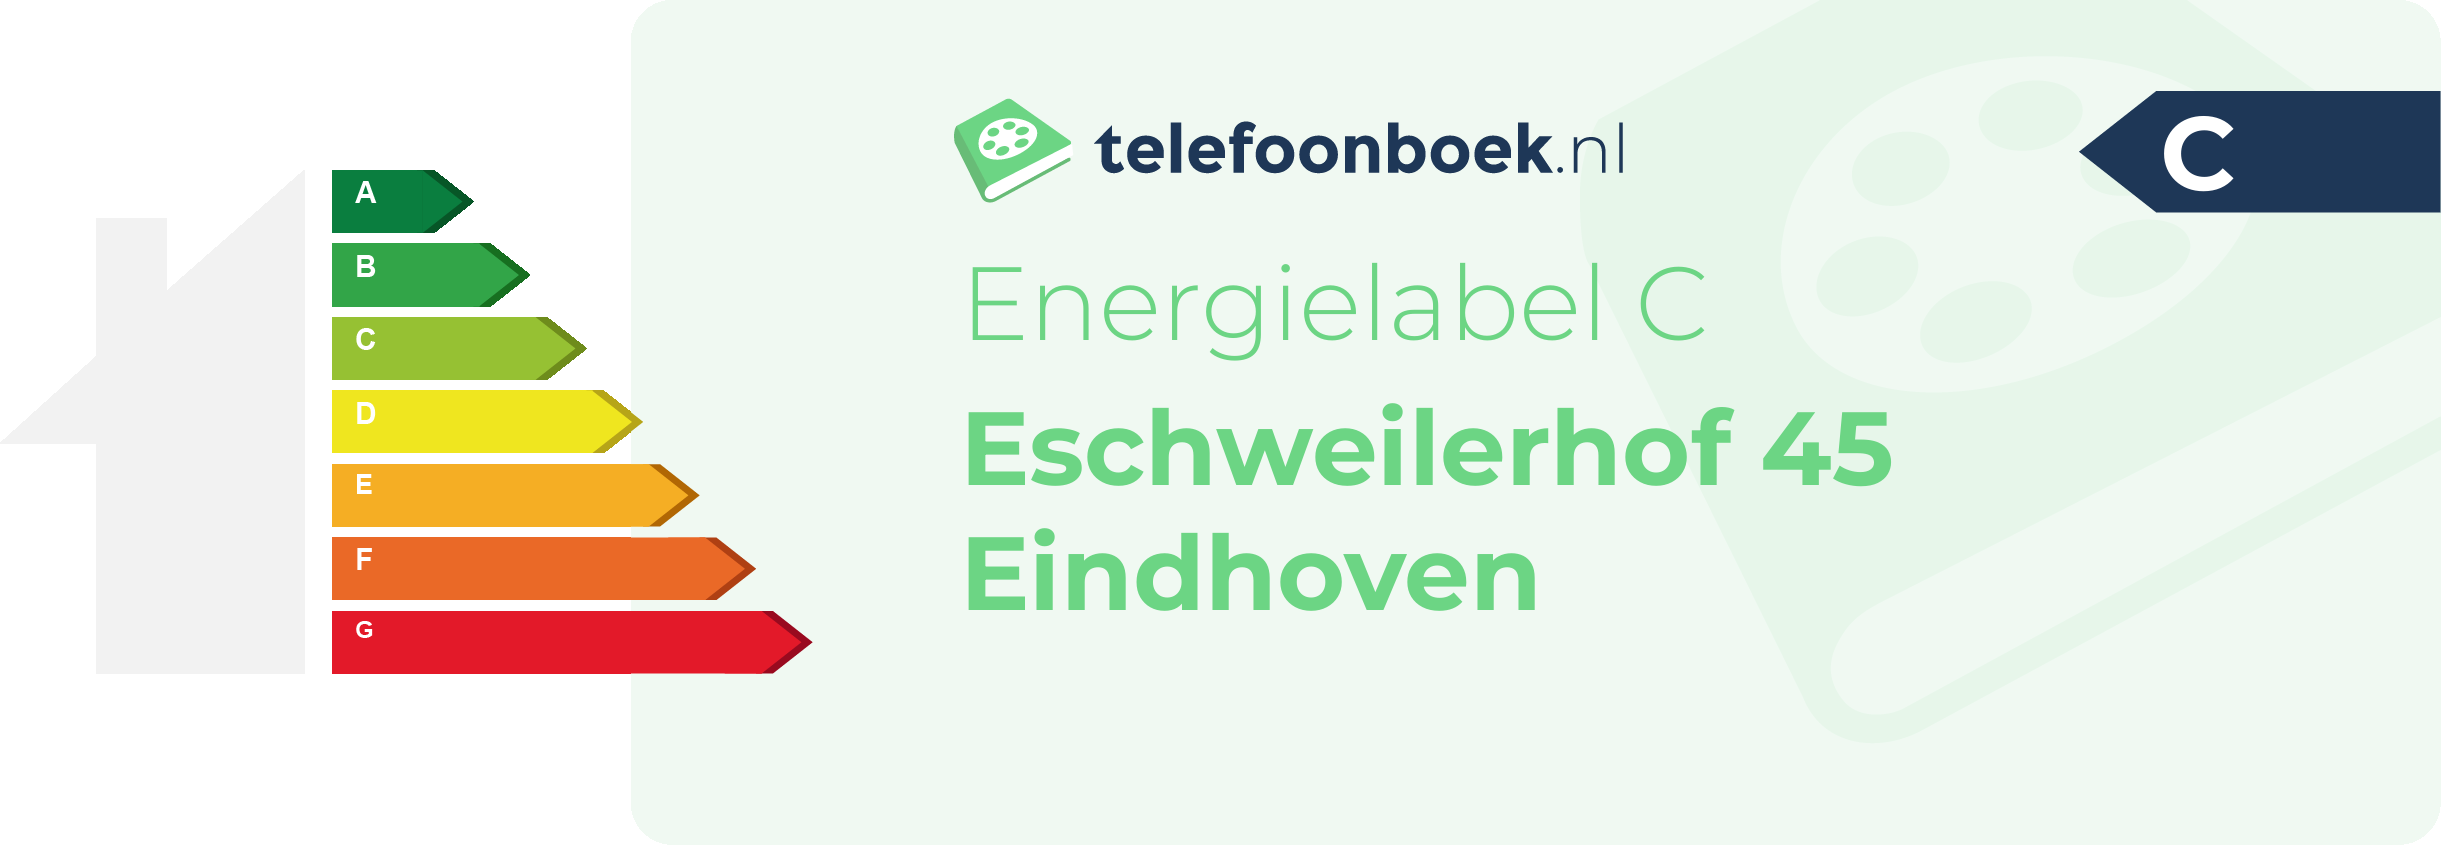 Energielabel Eschweilerhof 45 Eindhoven